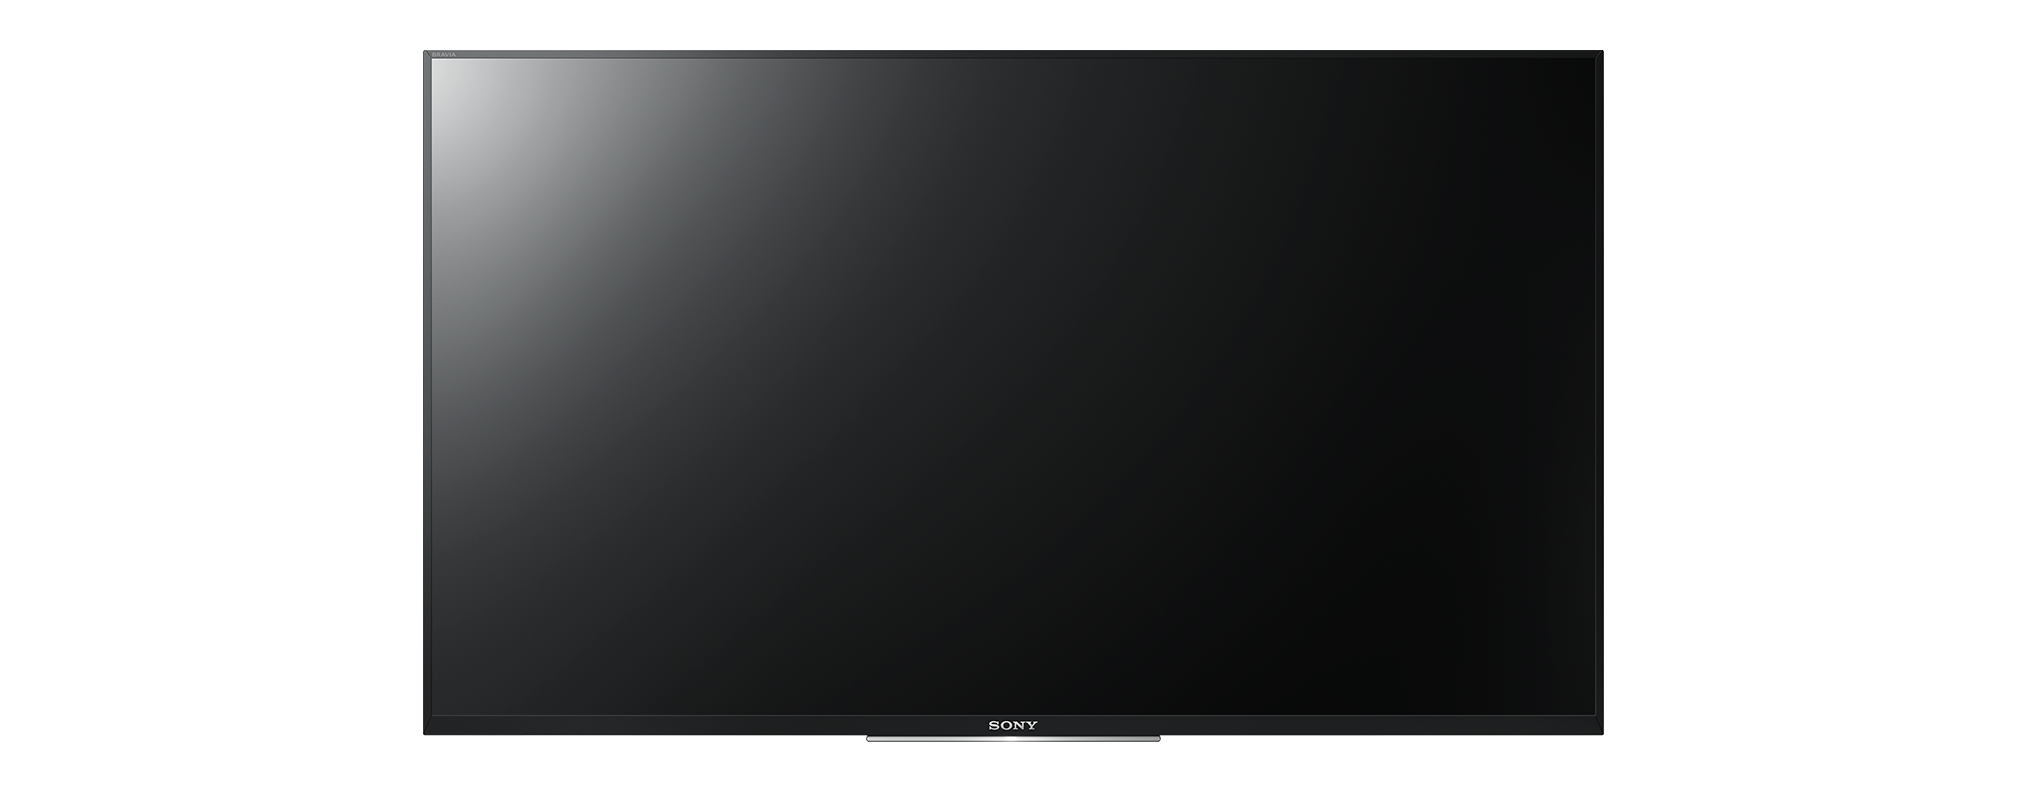 LED TV PNG Transparent Images | PNG All